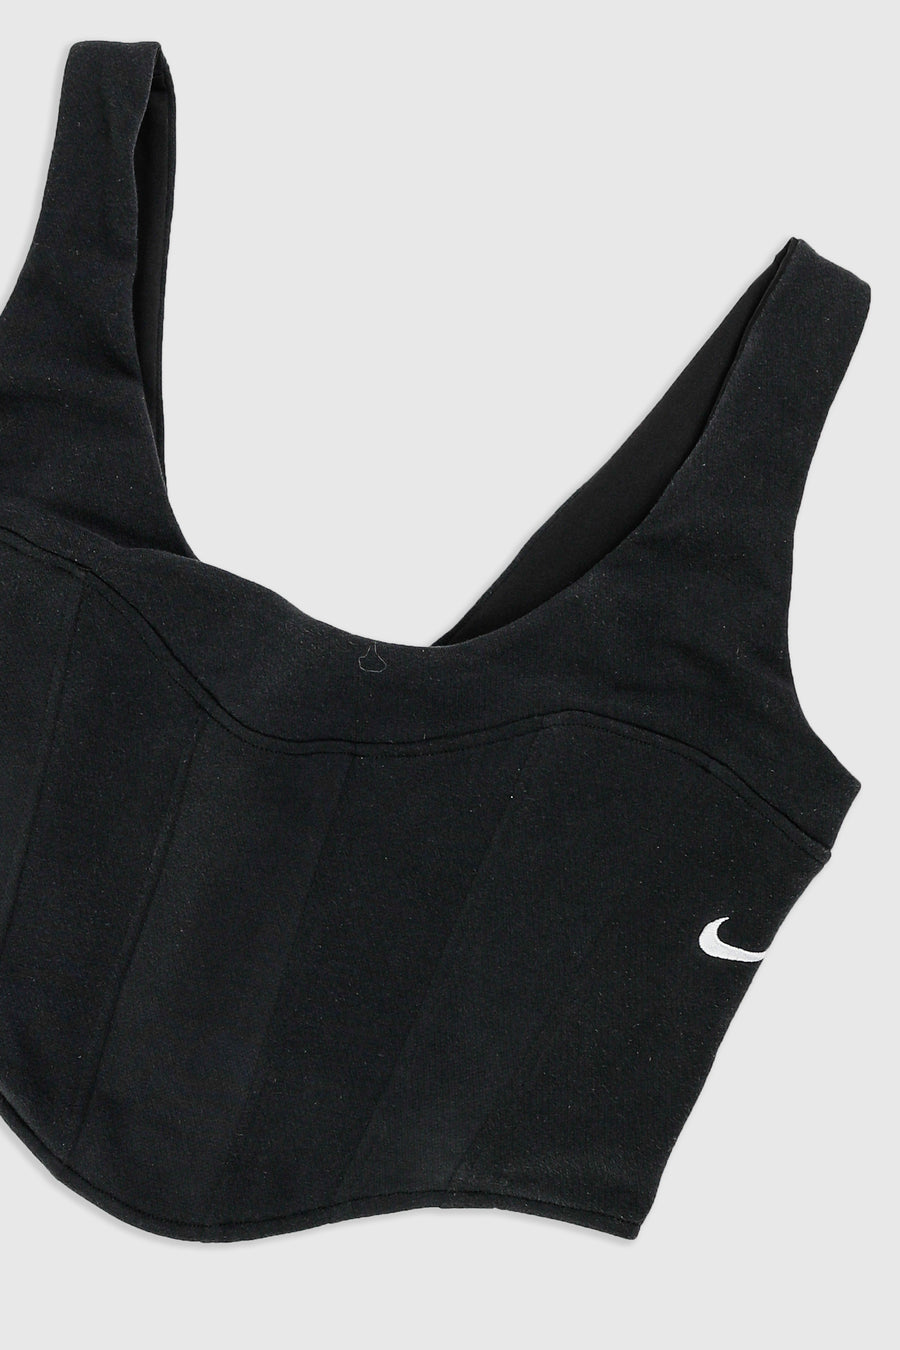 Rework Nike Sweatshirt Bustier - XL